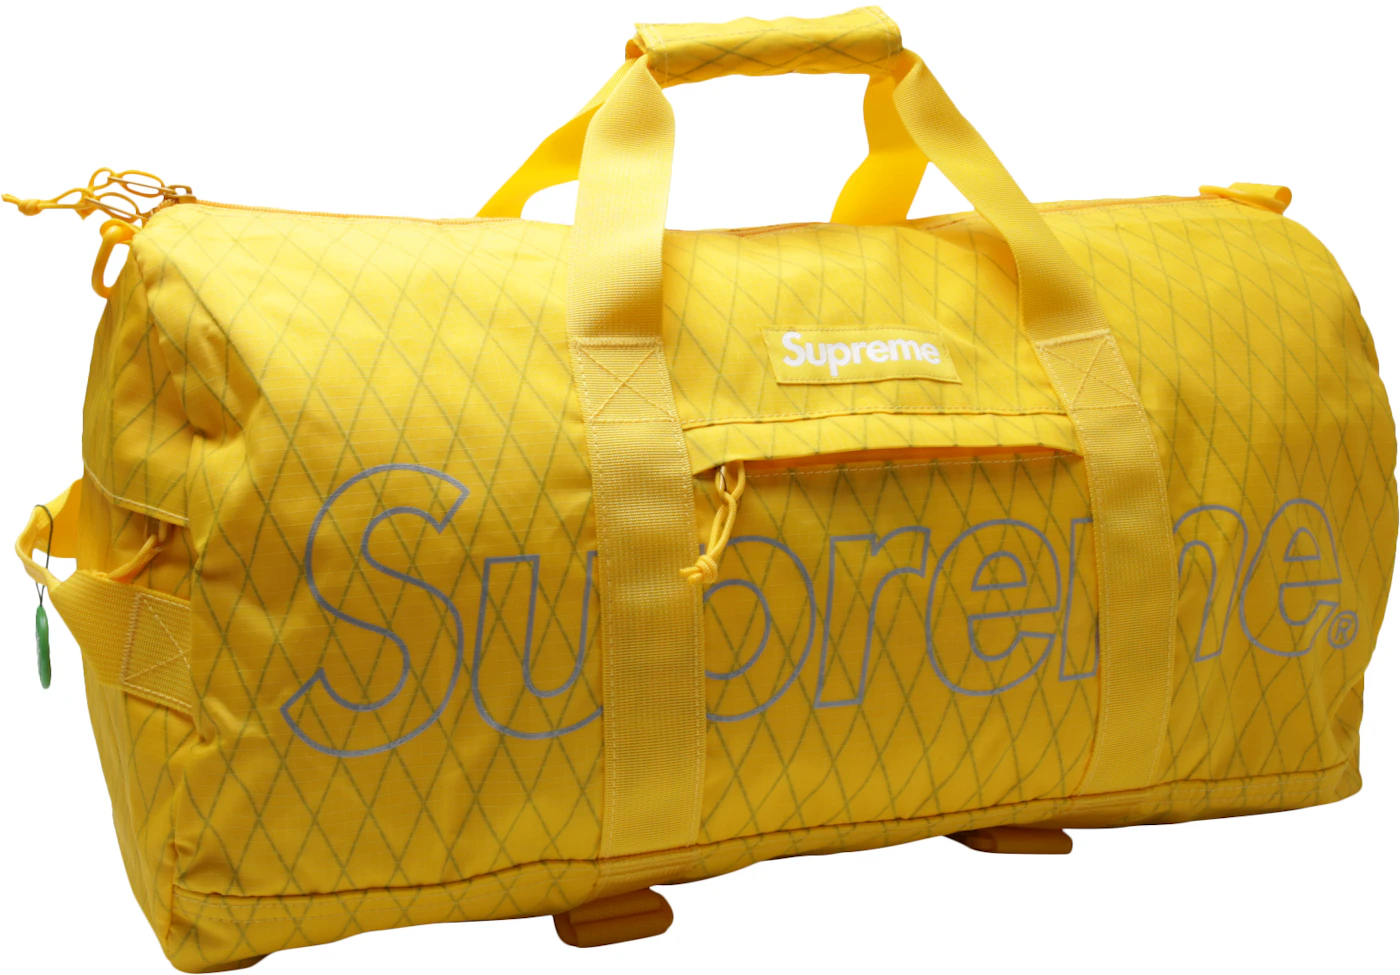 Buy Supreme Duffle Bag 'Yellow' - FW18A15 YELLOW